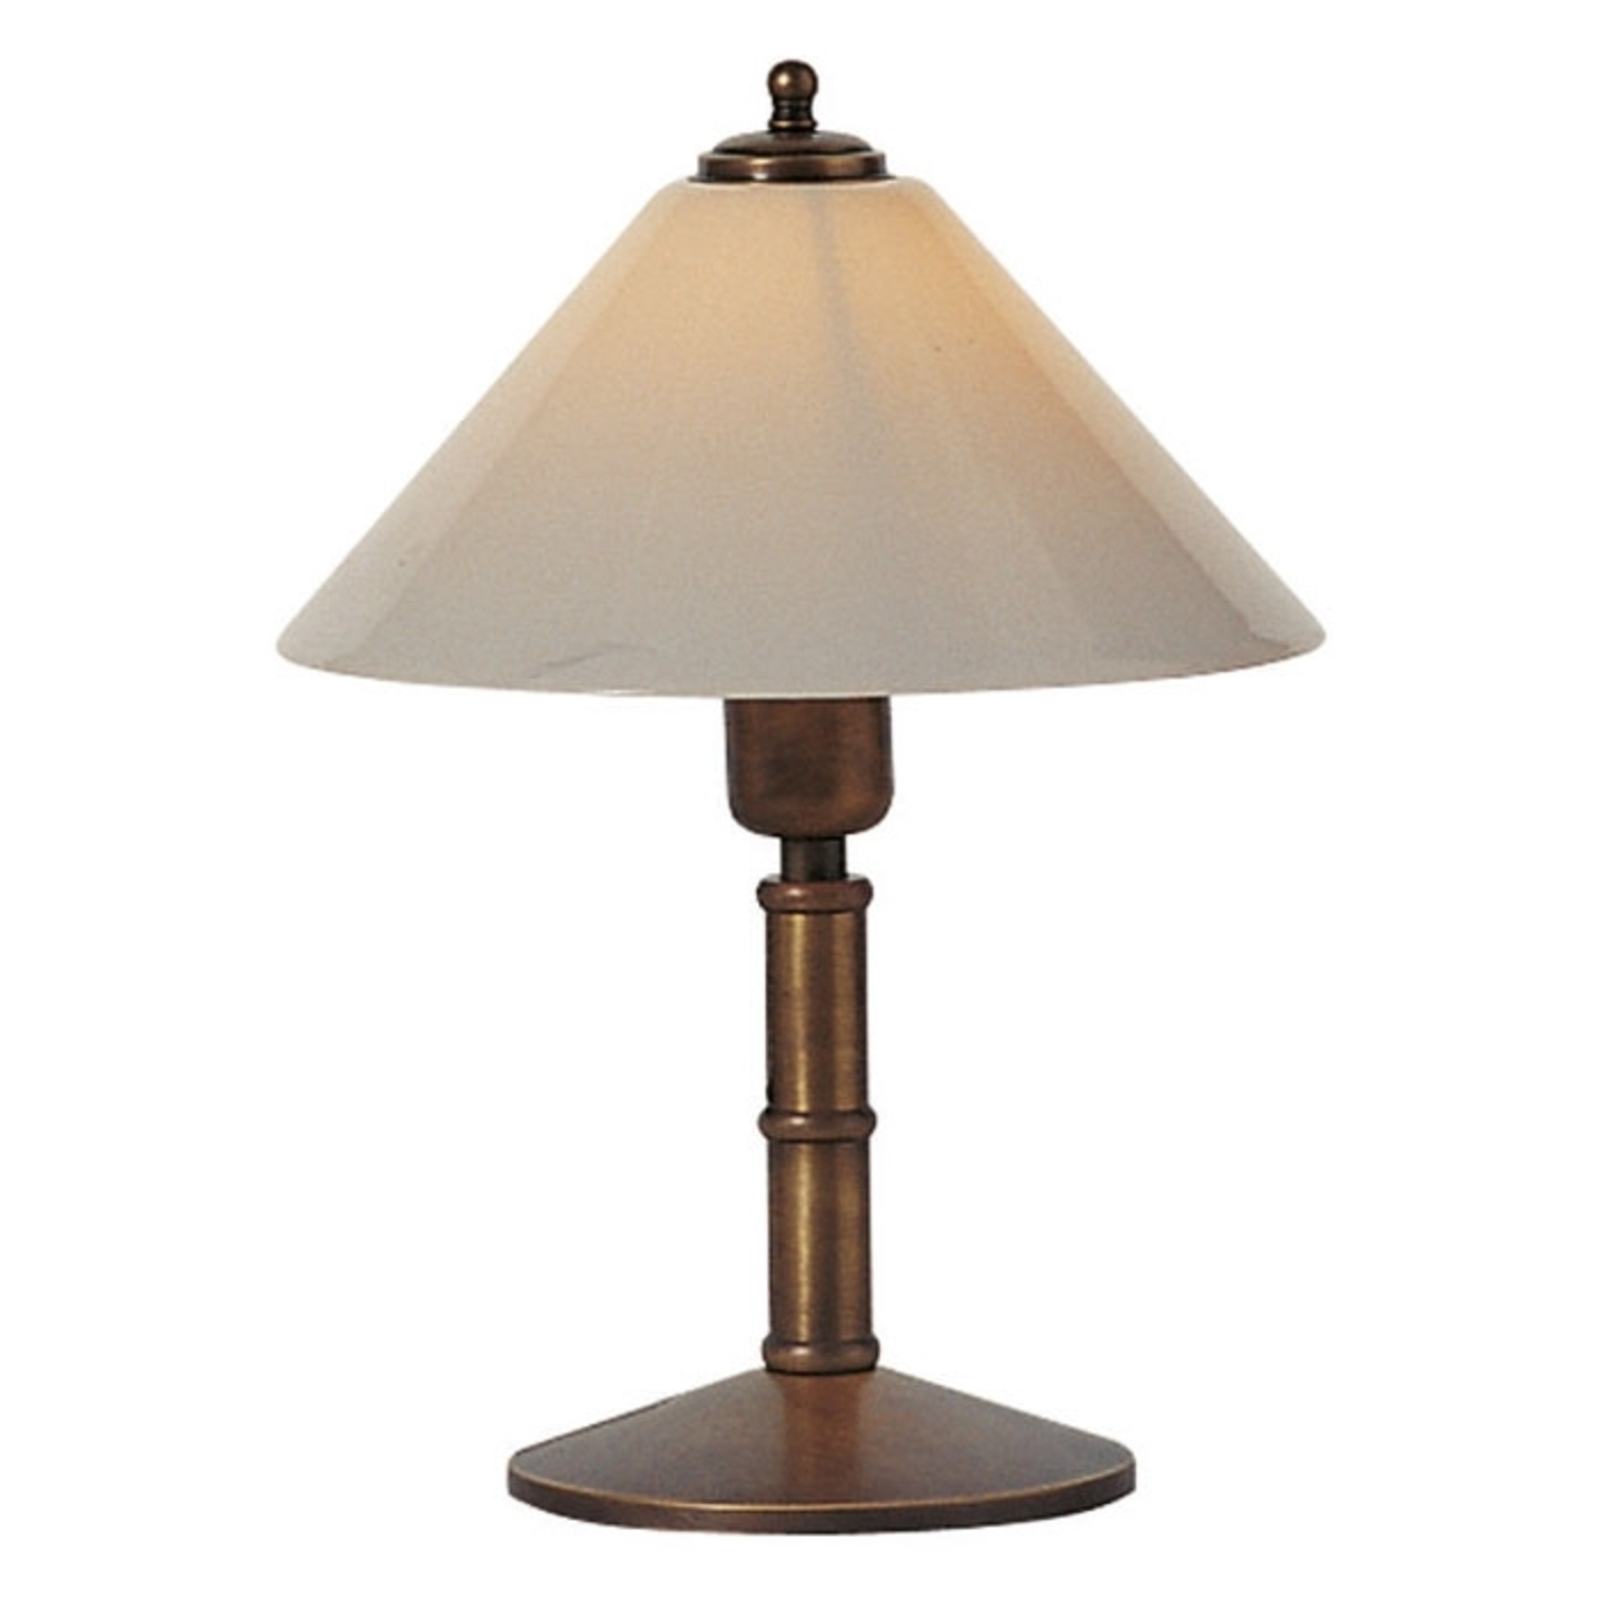 Ongemak genoeg steek ANNO 1900 tafellamp met antieke uitstraling | Lampen24.be